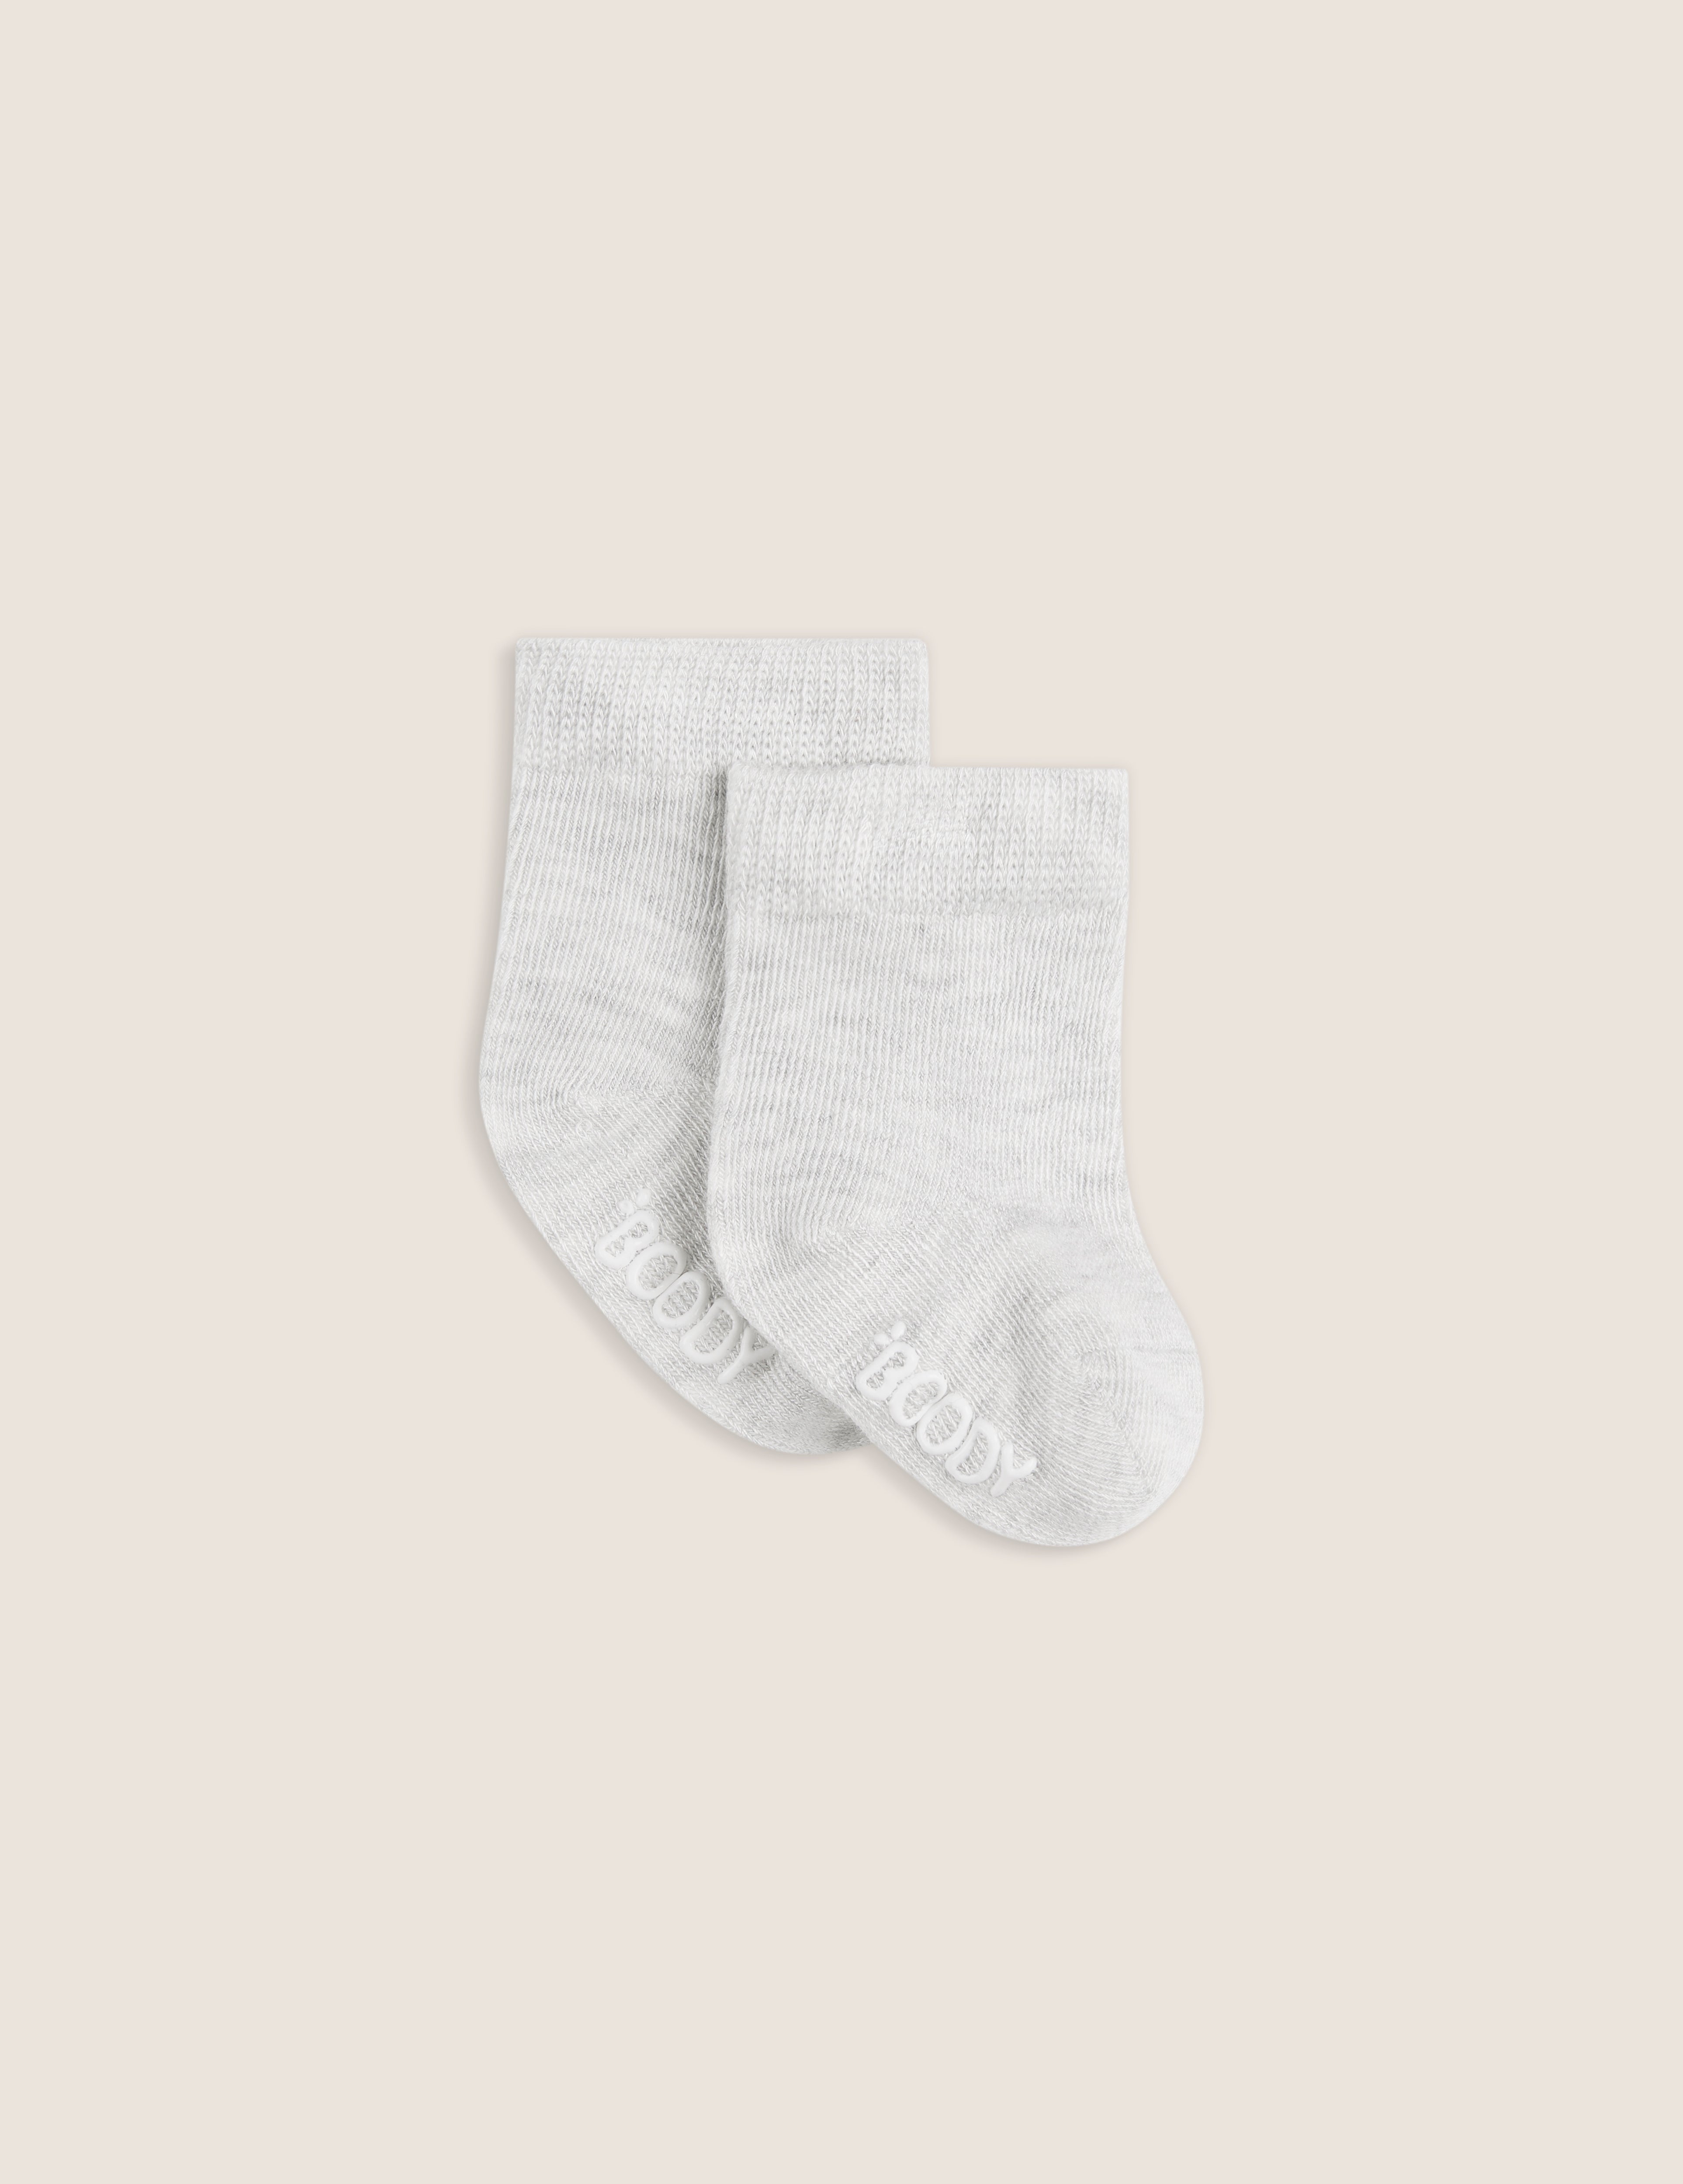 BS045_HEATHER GREYNATURAL WHITE_Baby Socks - 3 Pack 2.0_4.jpg